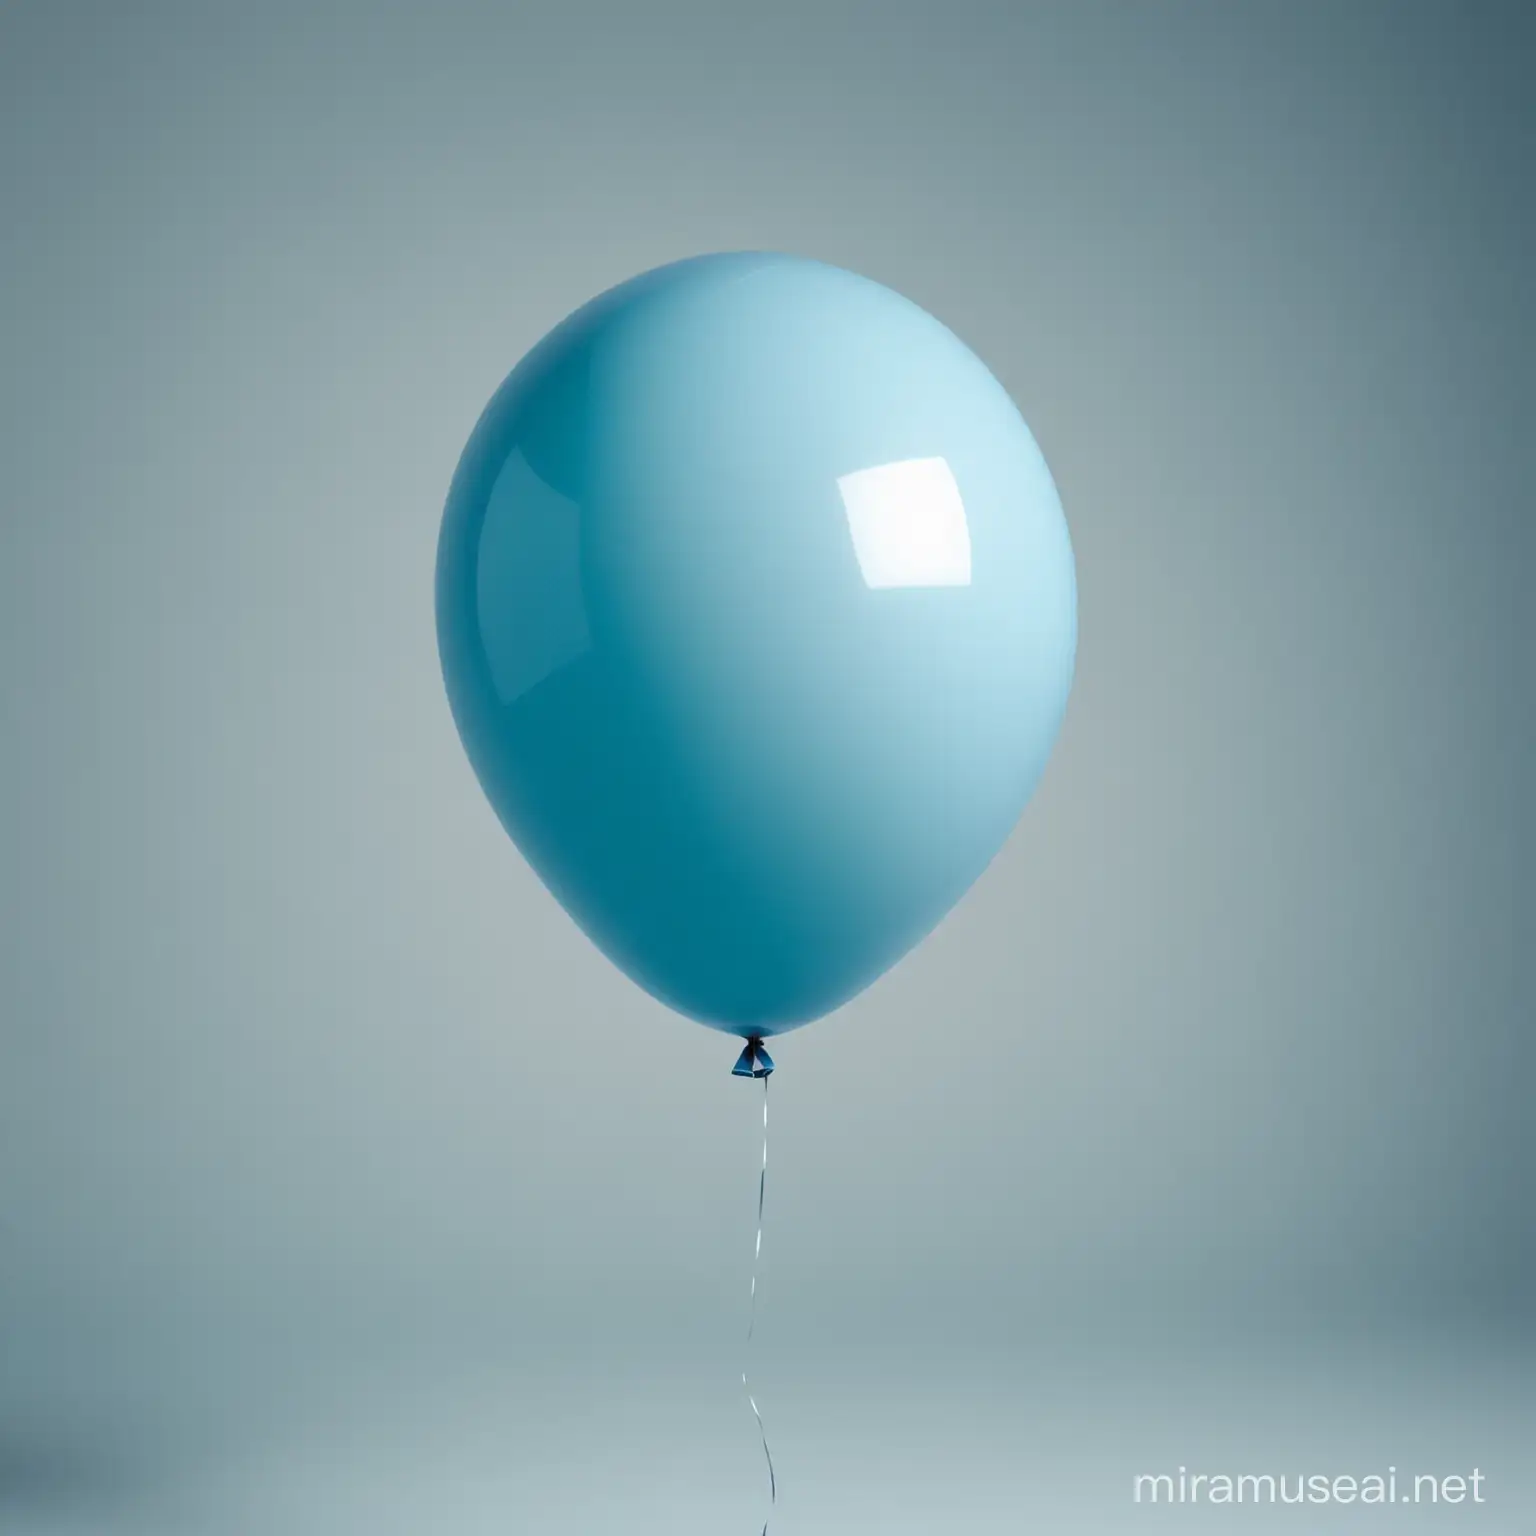 Symmetrical Blue Balloon on Isolated Background